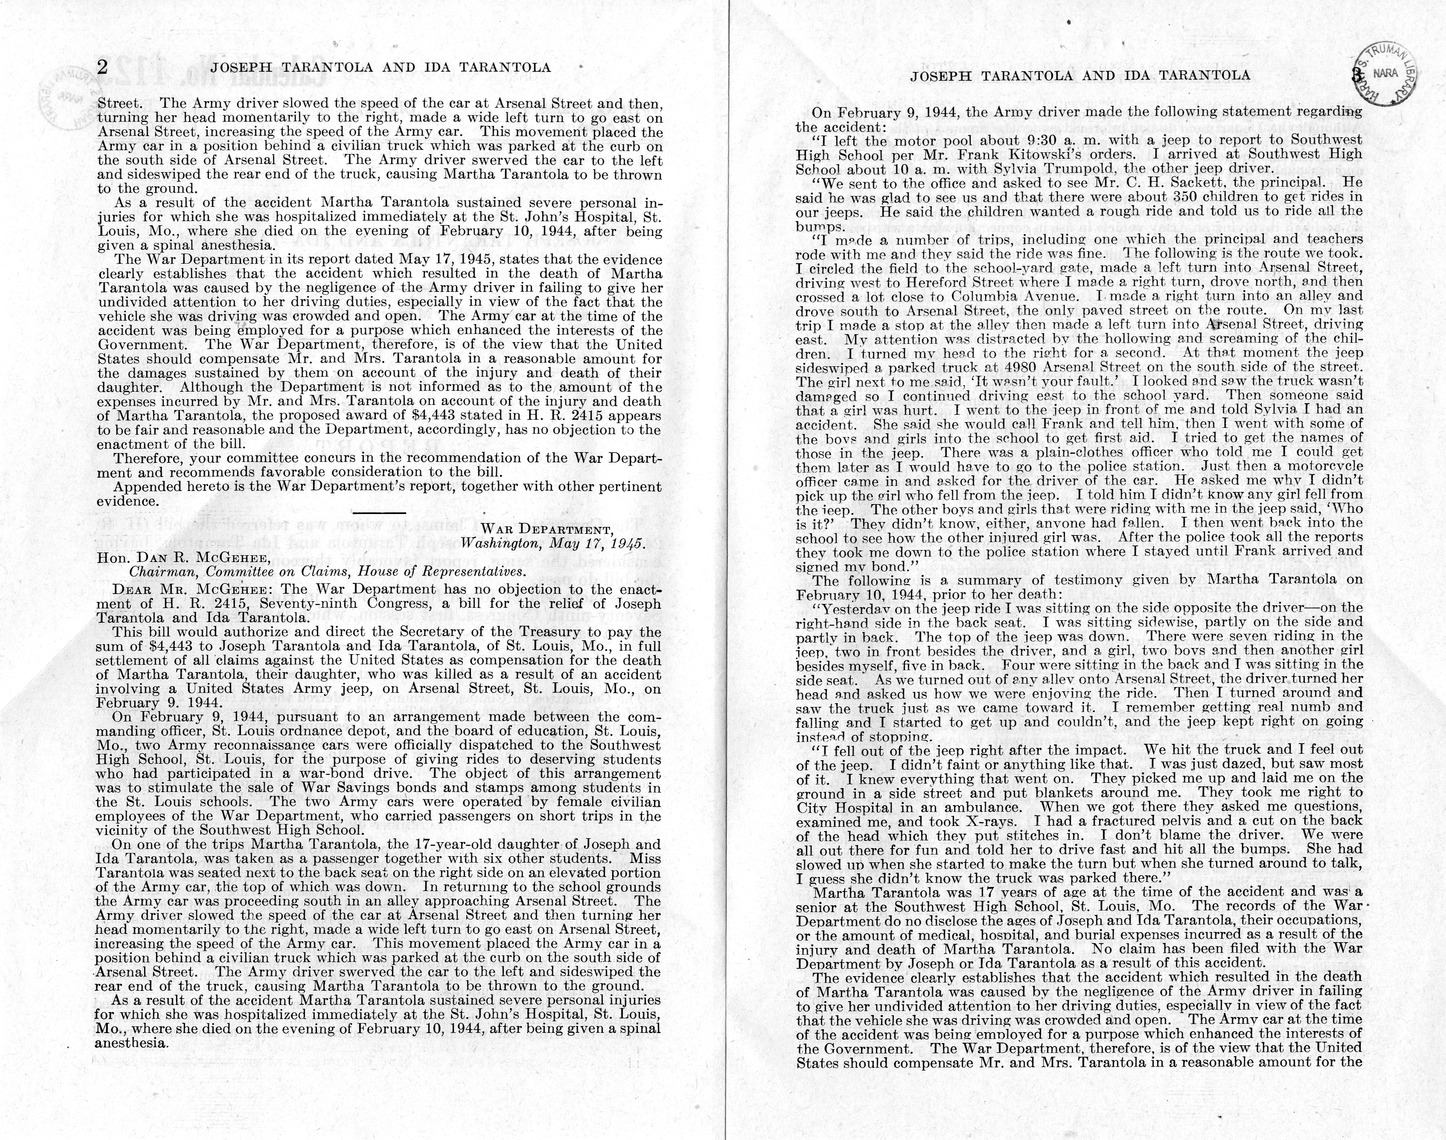 Memorandum from Frederick J. Bailey to M. C. Latta, H. R. 2415, For the Relief of Joseph Tarantola and Ida Tarantola, with Attachments